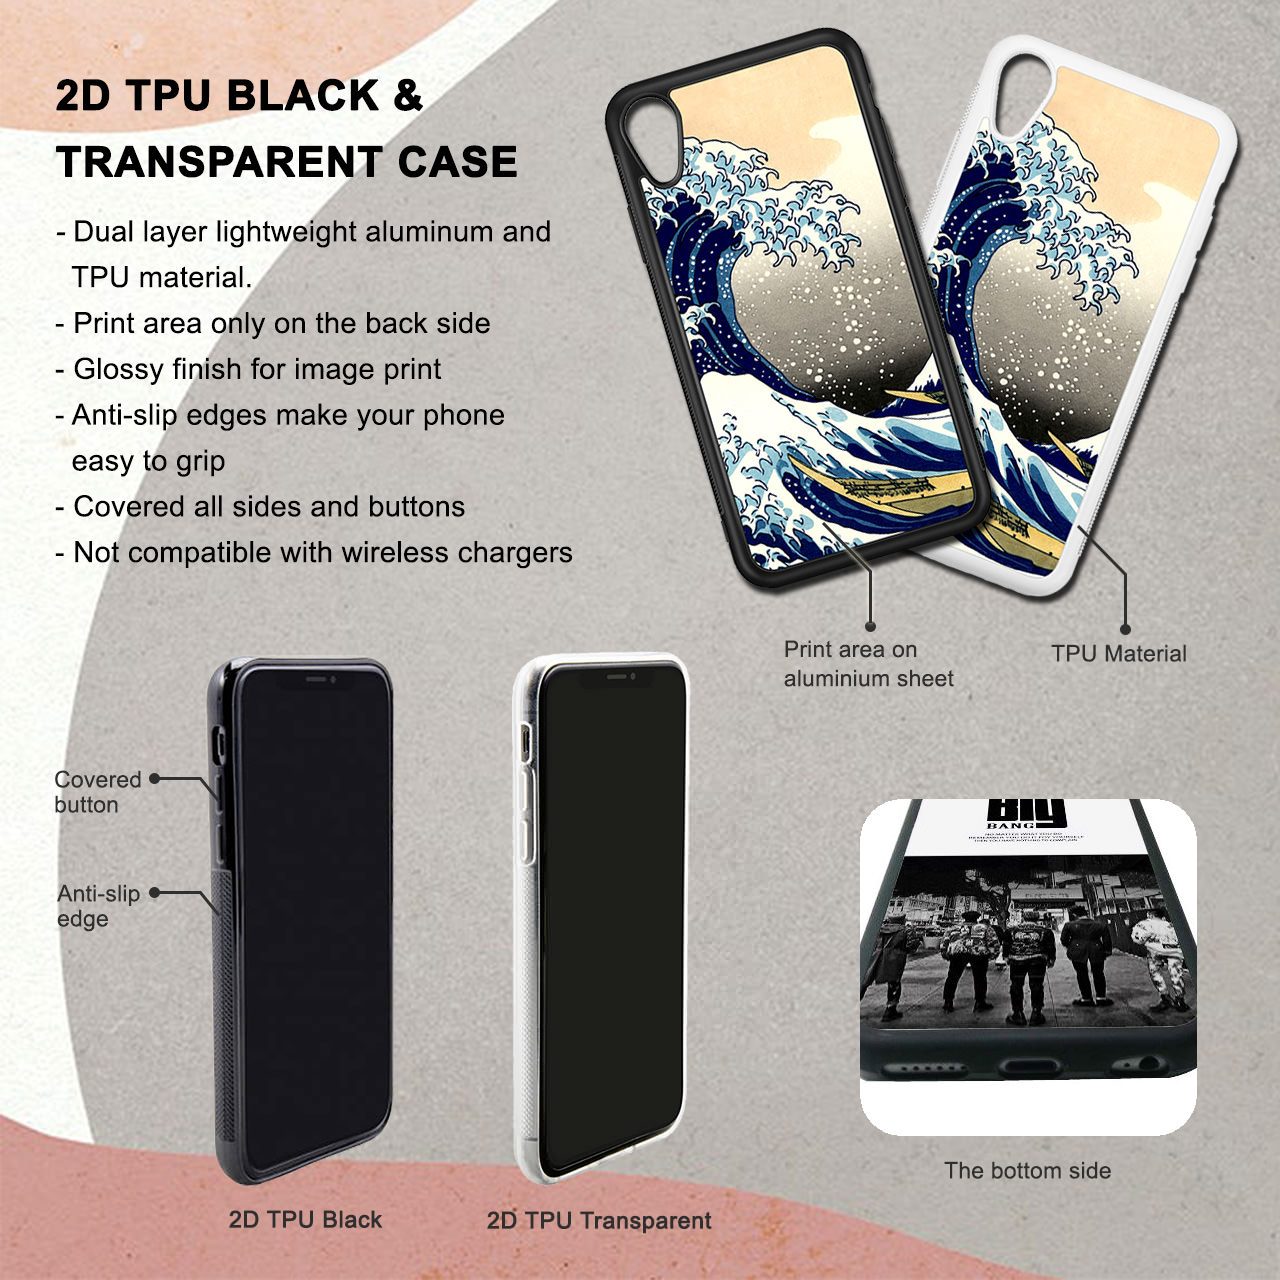 Double Dragons iPhone 6 / 6s Plus Case